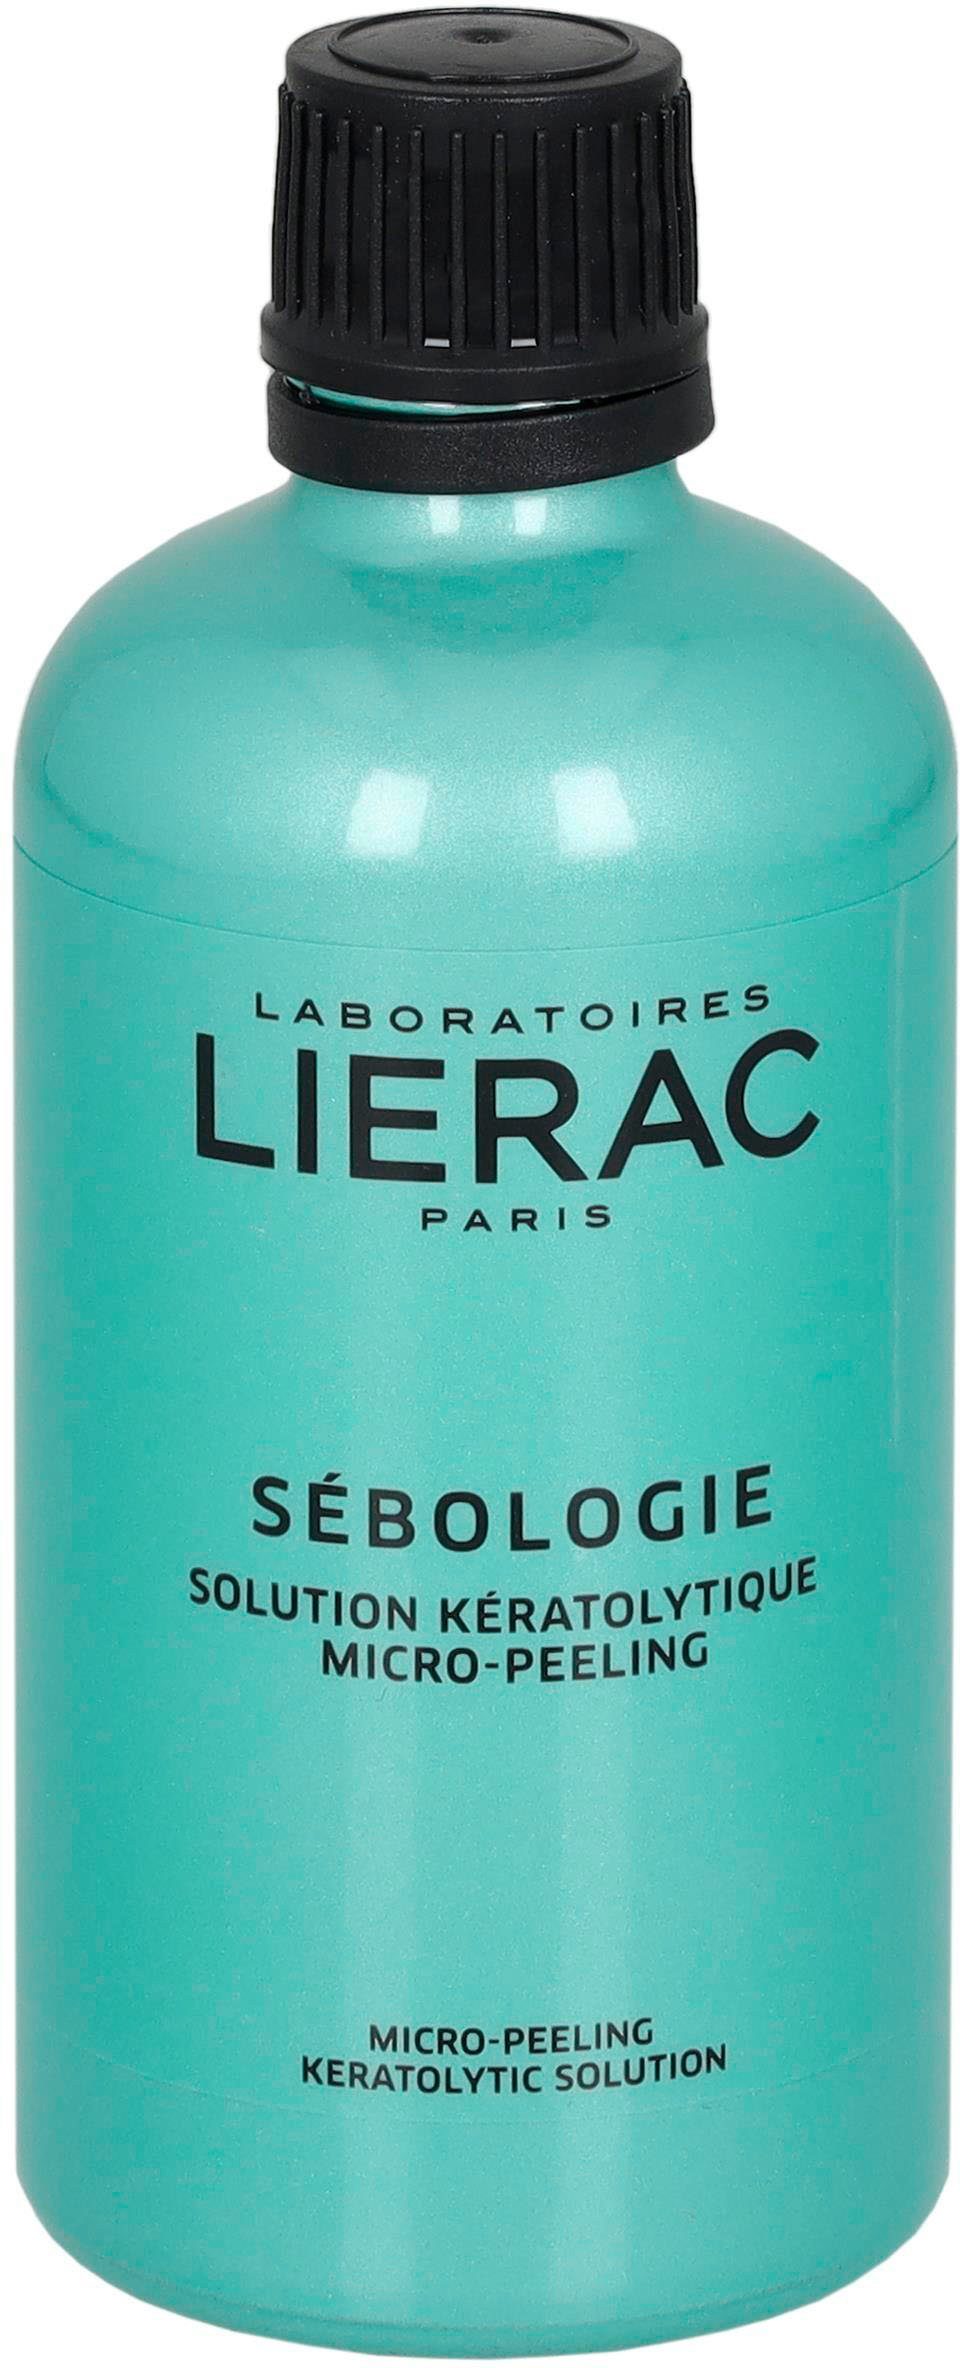 LIERAC Gesichts-Reinigungsfluid Sebologie Solution Keratolytique Micro-Peeling